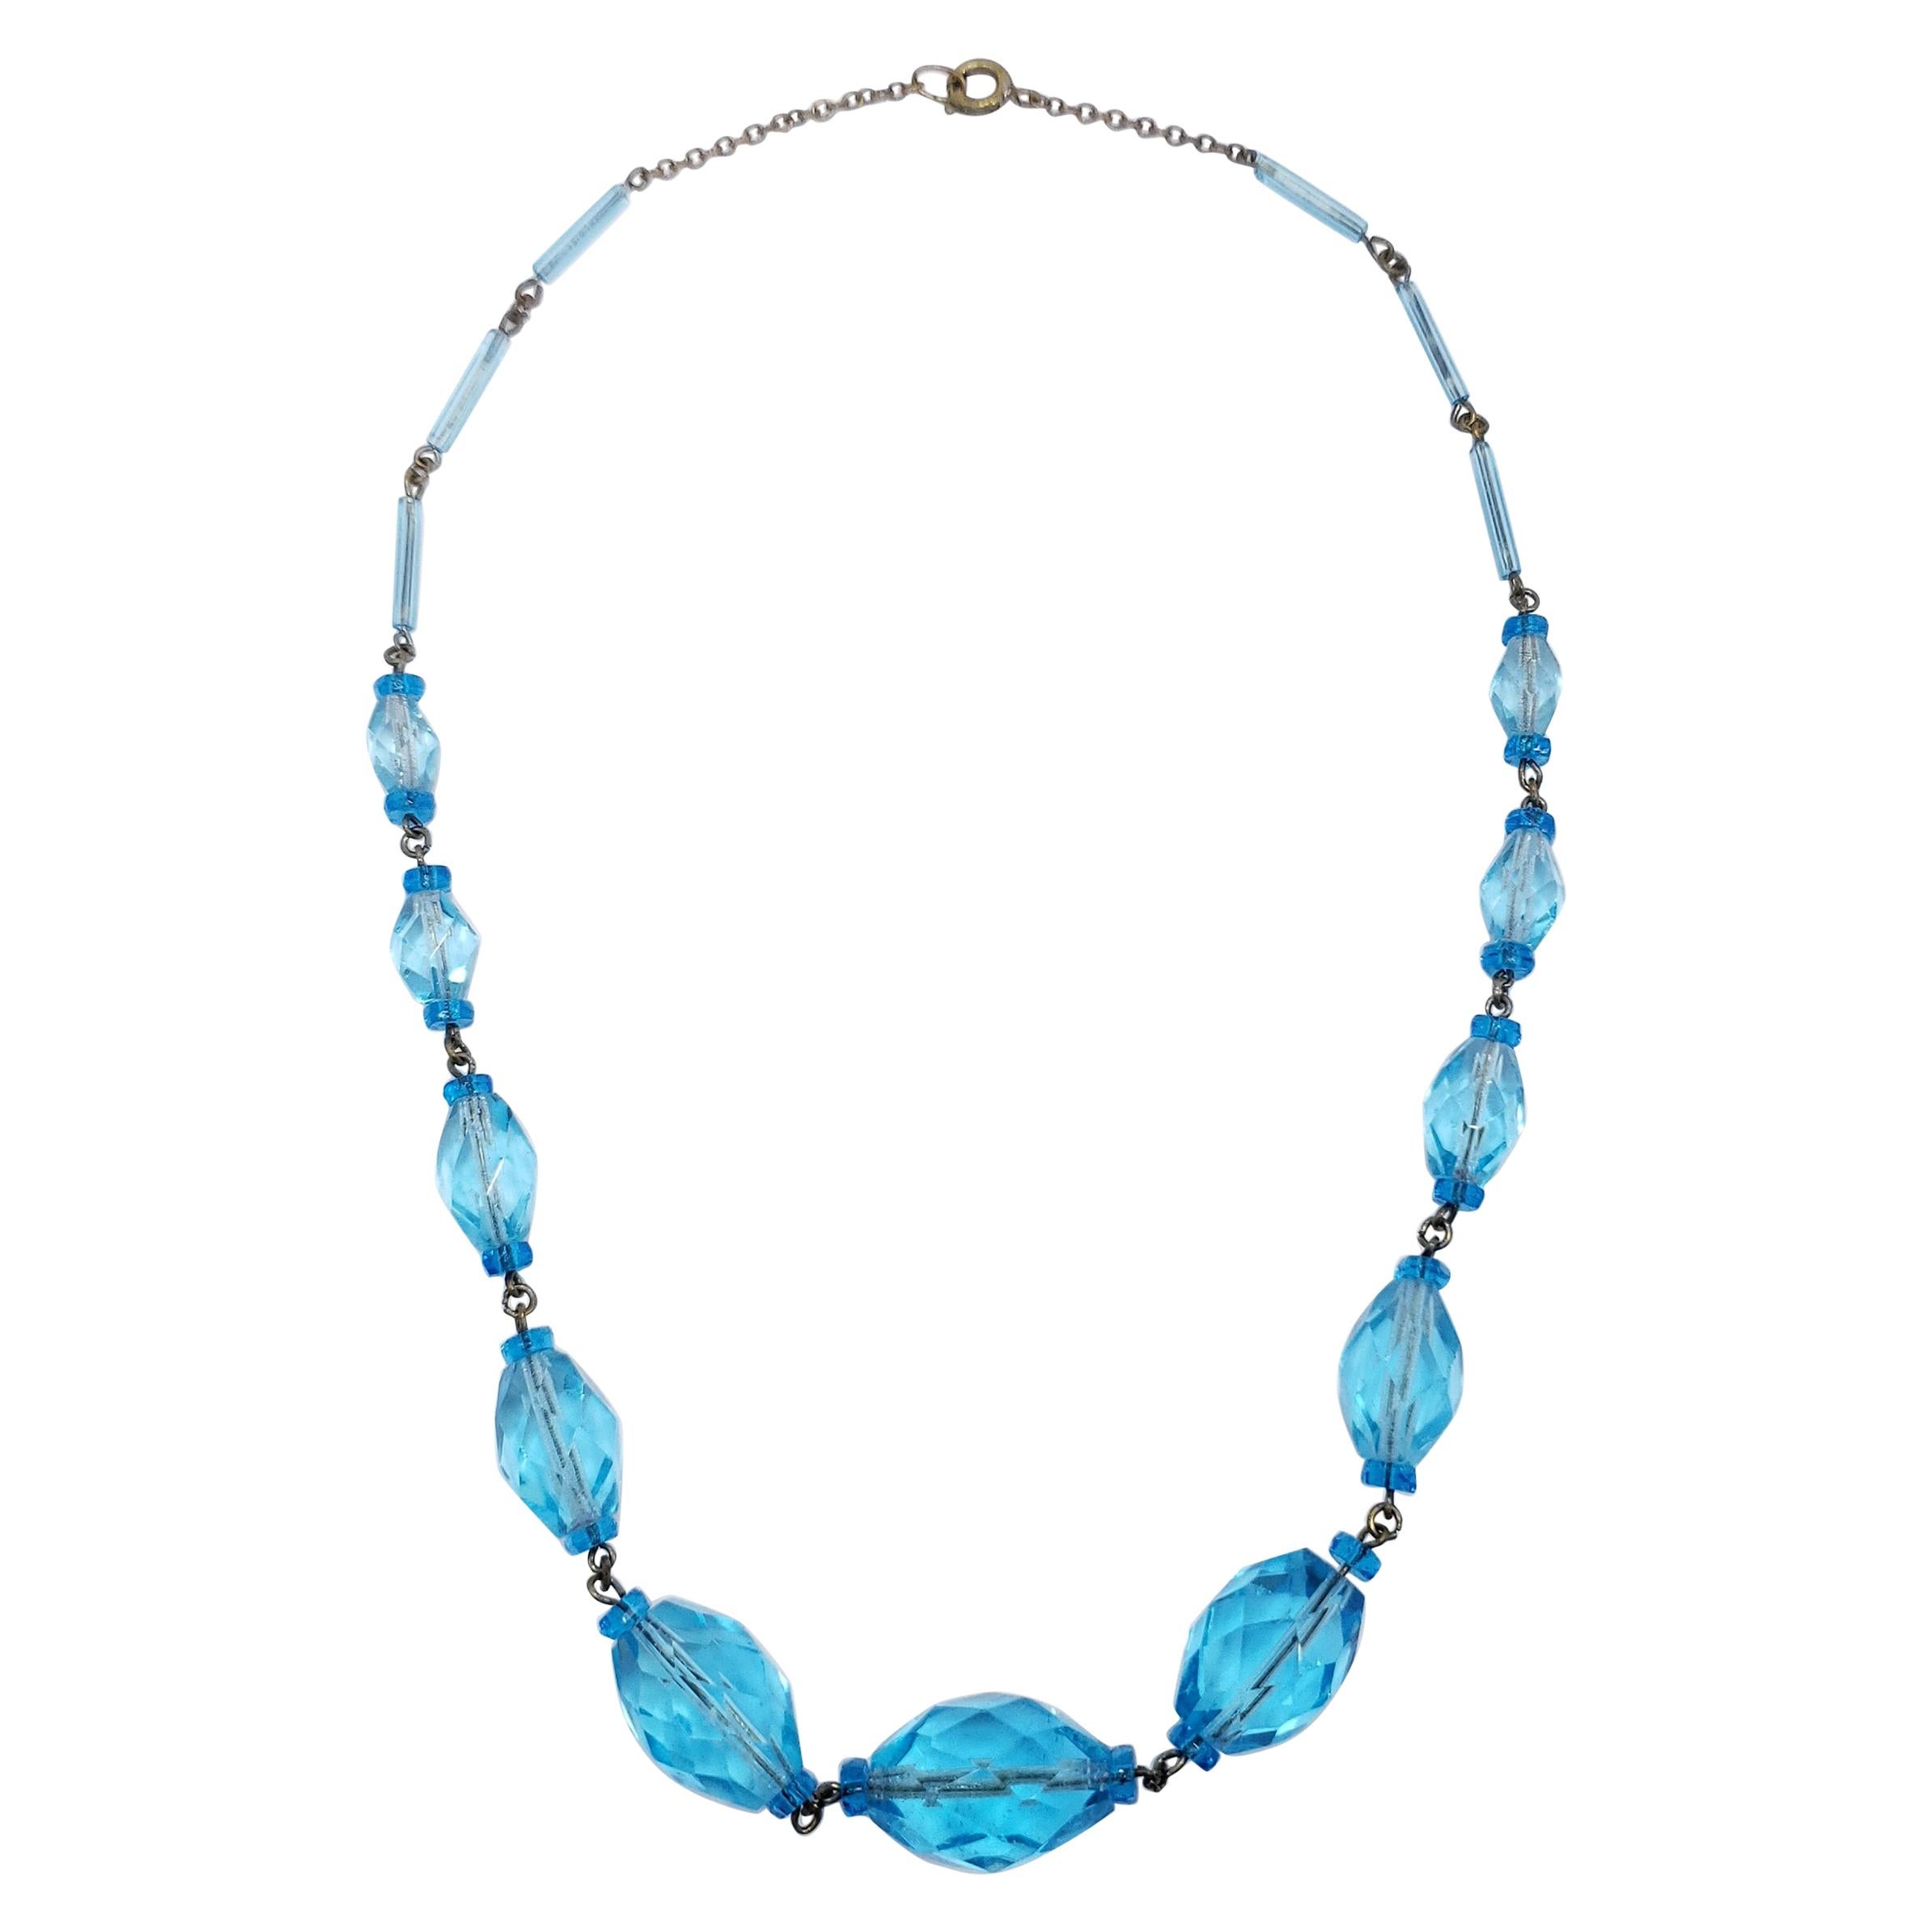 Vintage Graduated Crystal Chain Necklace, Mid 1900s, Aquamarine Blue Color